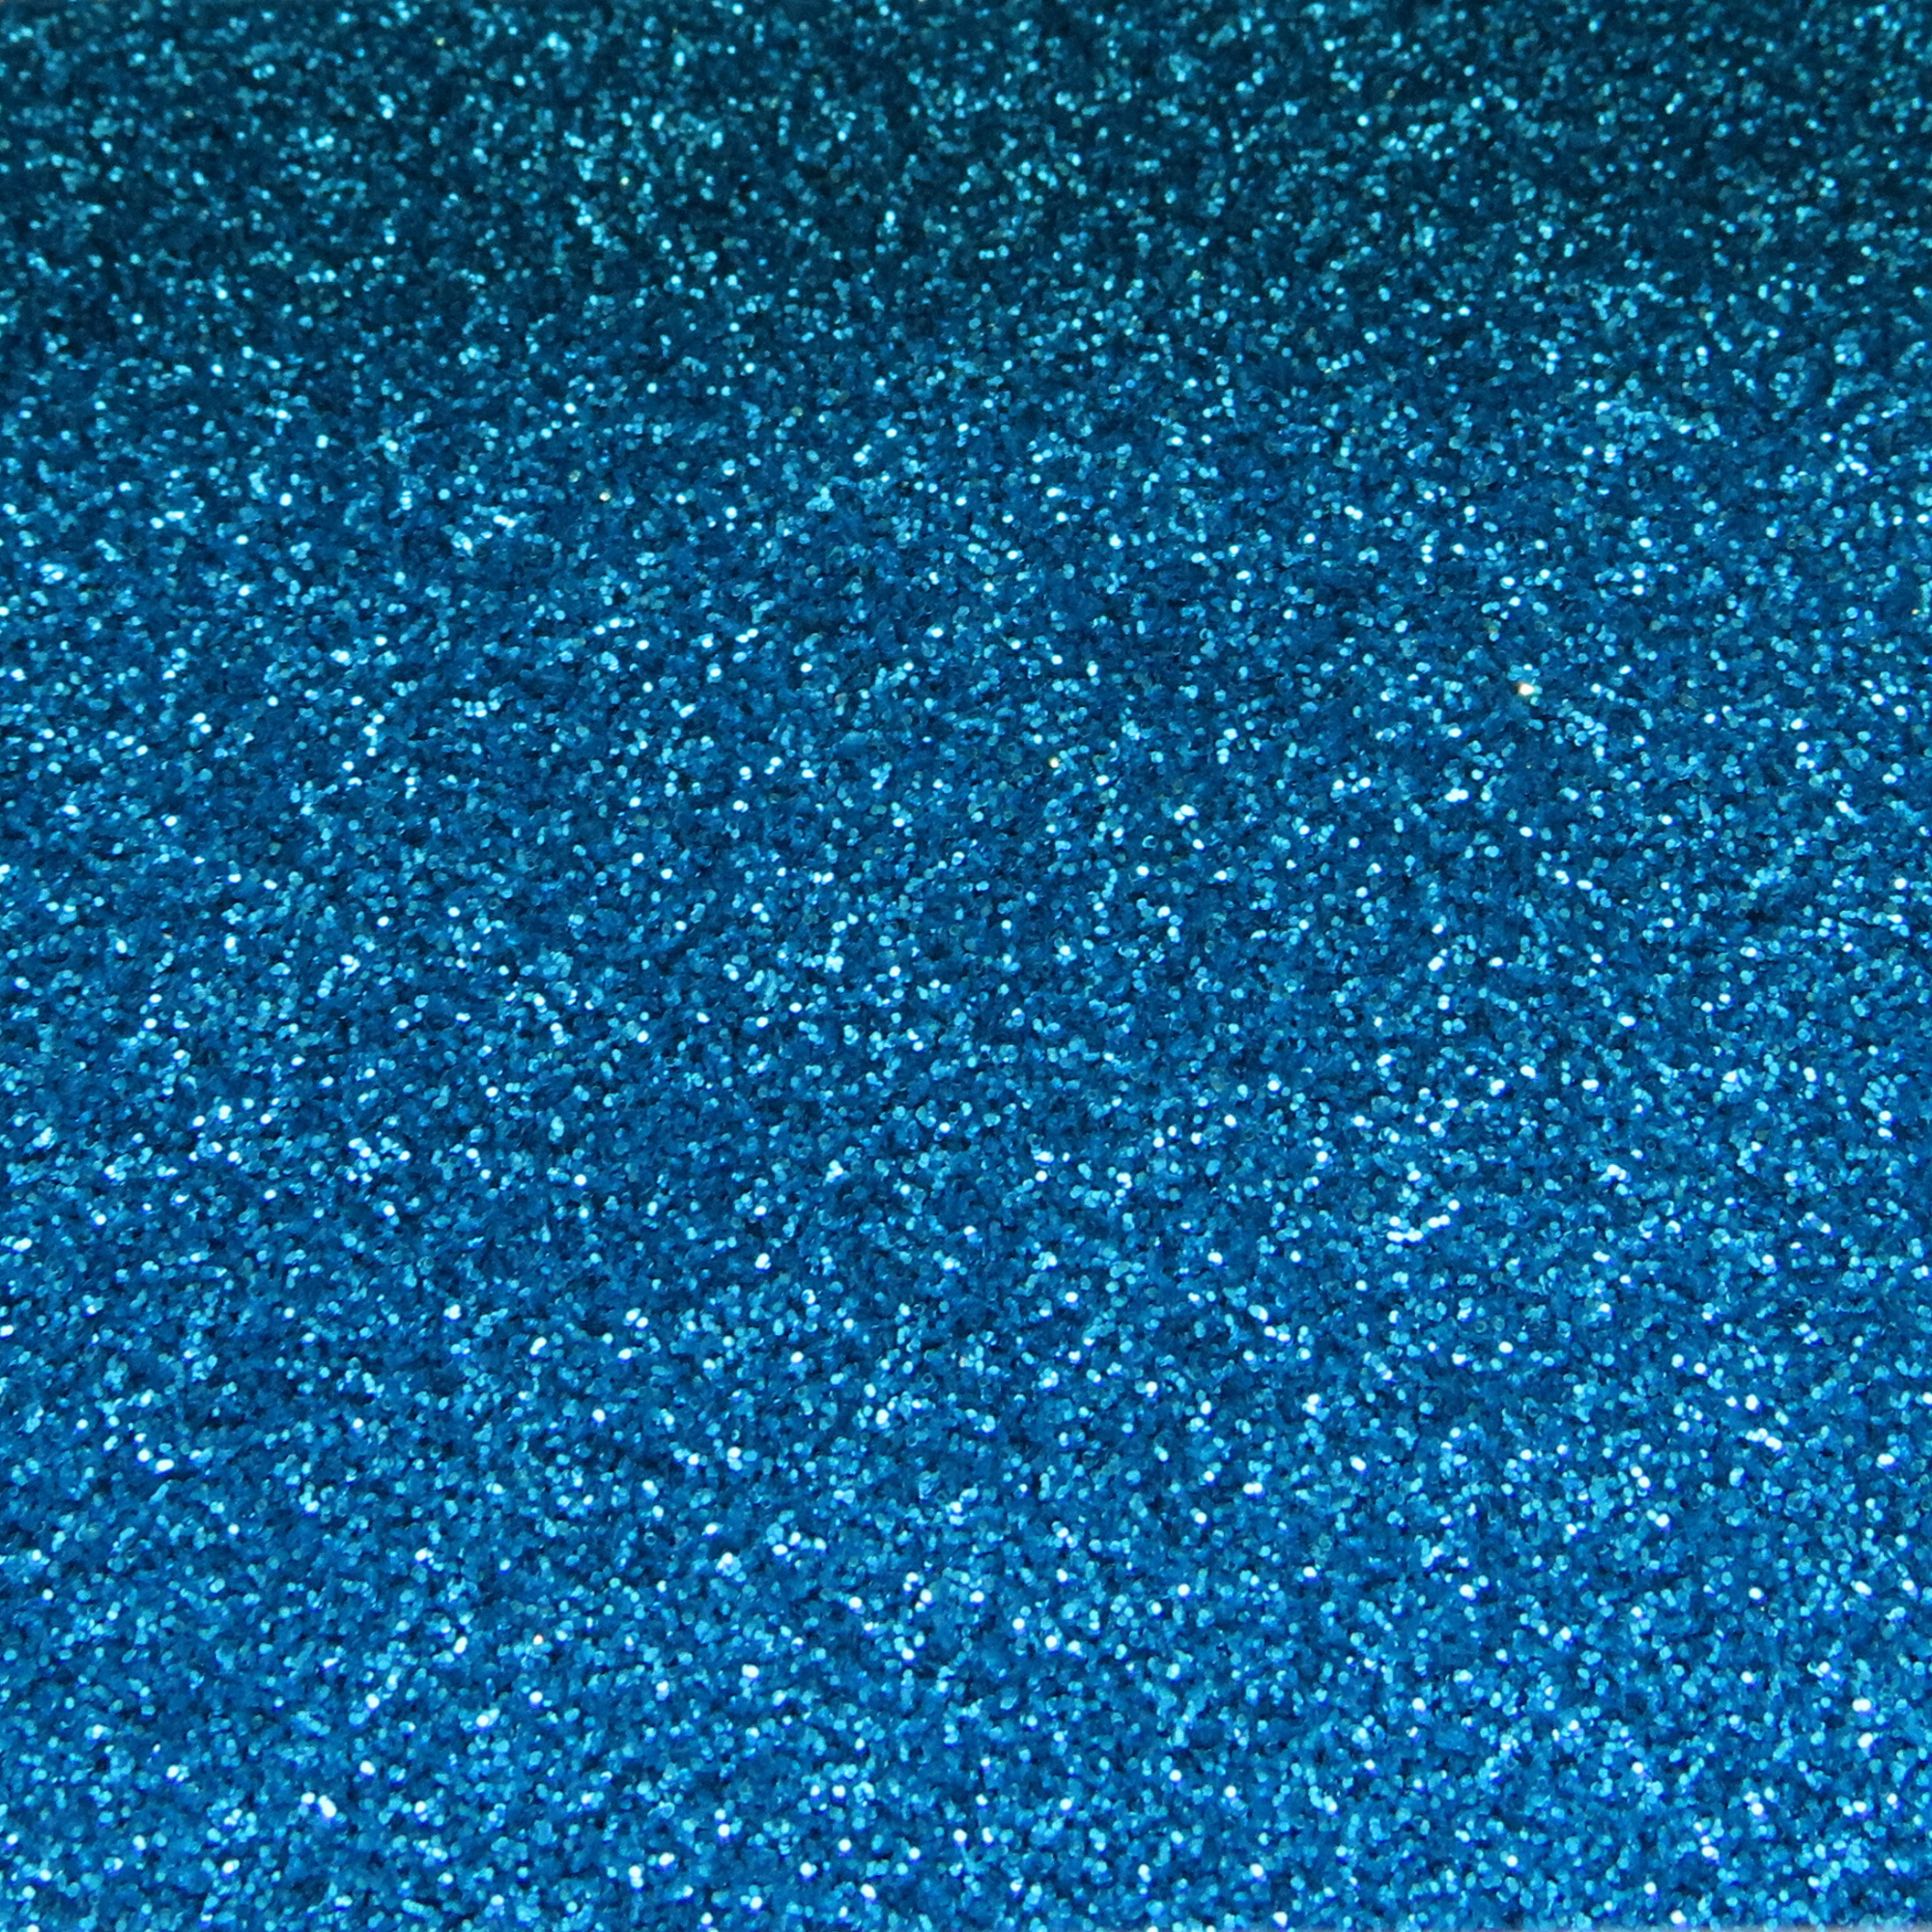 Sky blue fine eco friendly cosmetic grade glitter. Globally cosmetic compliant glitter